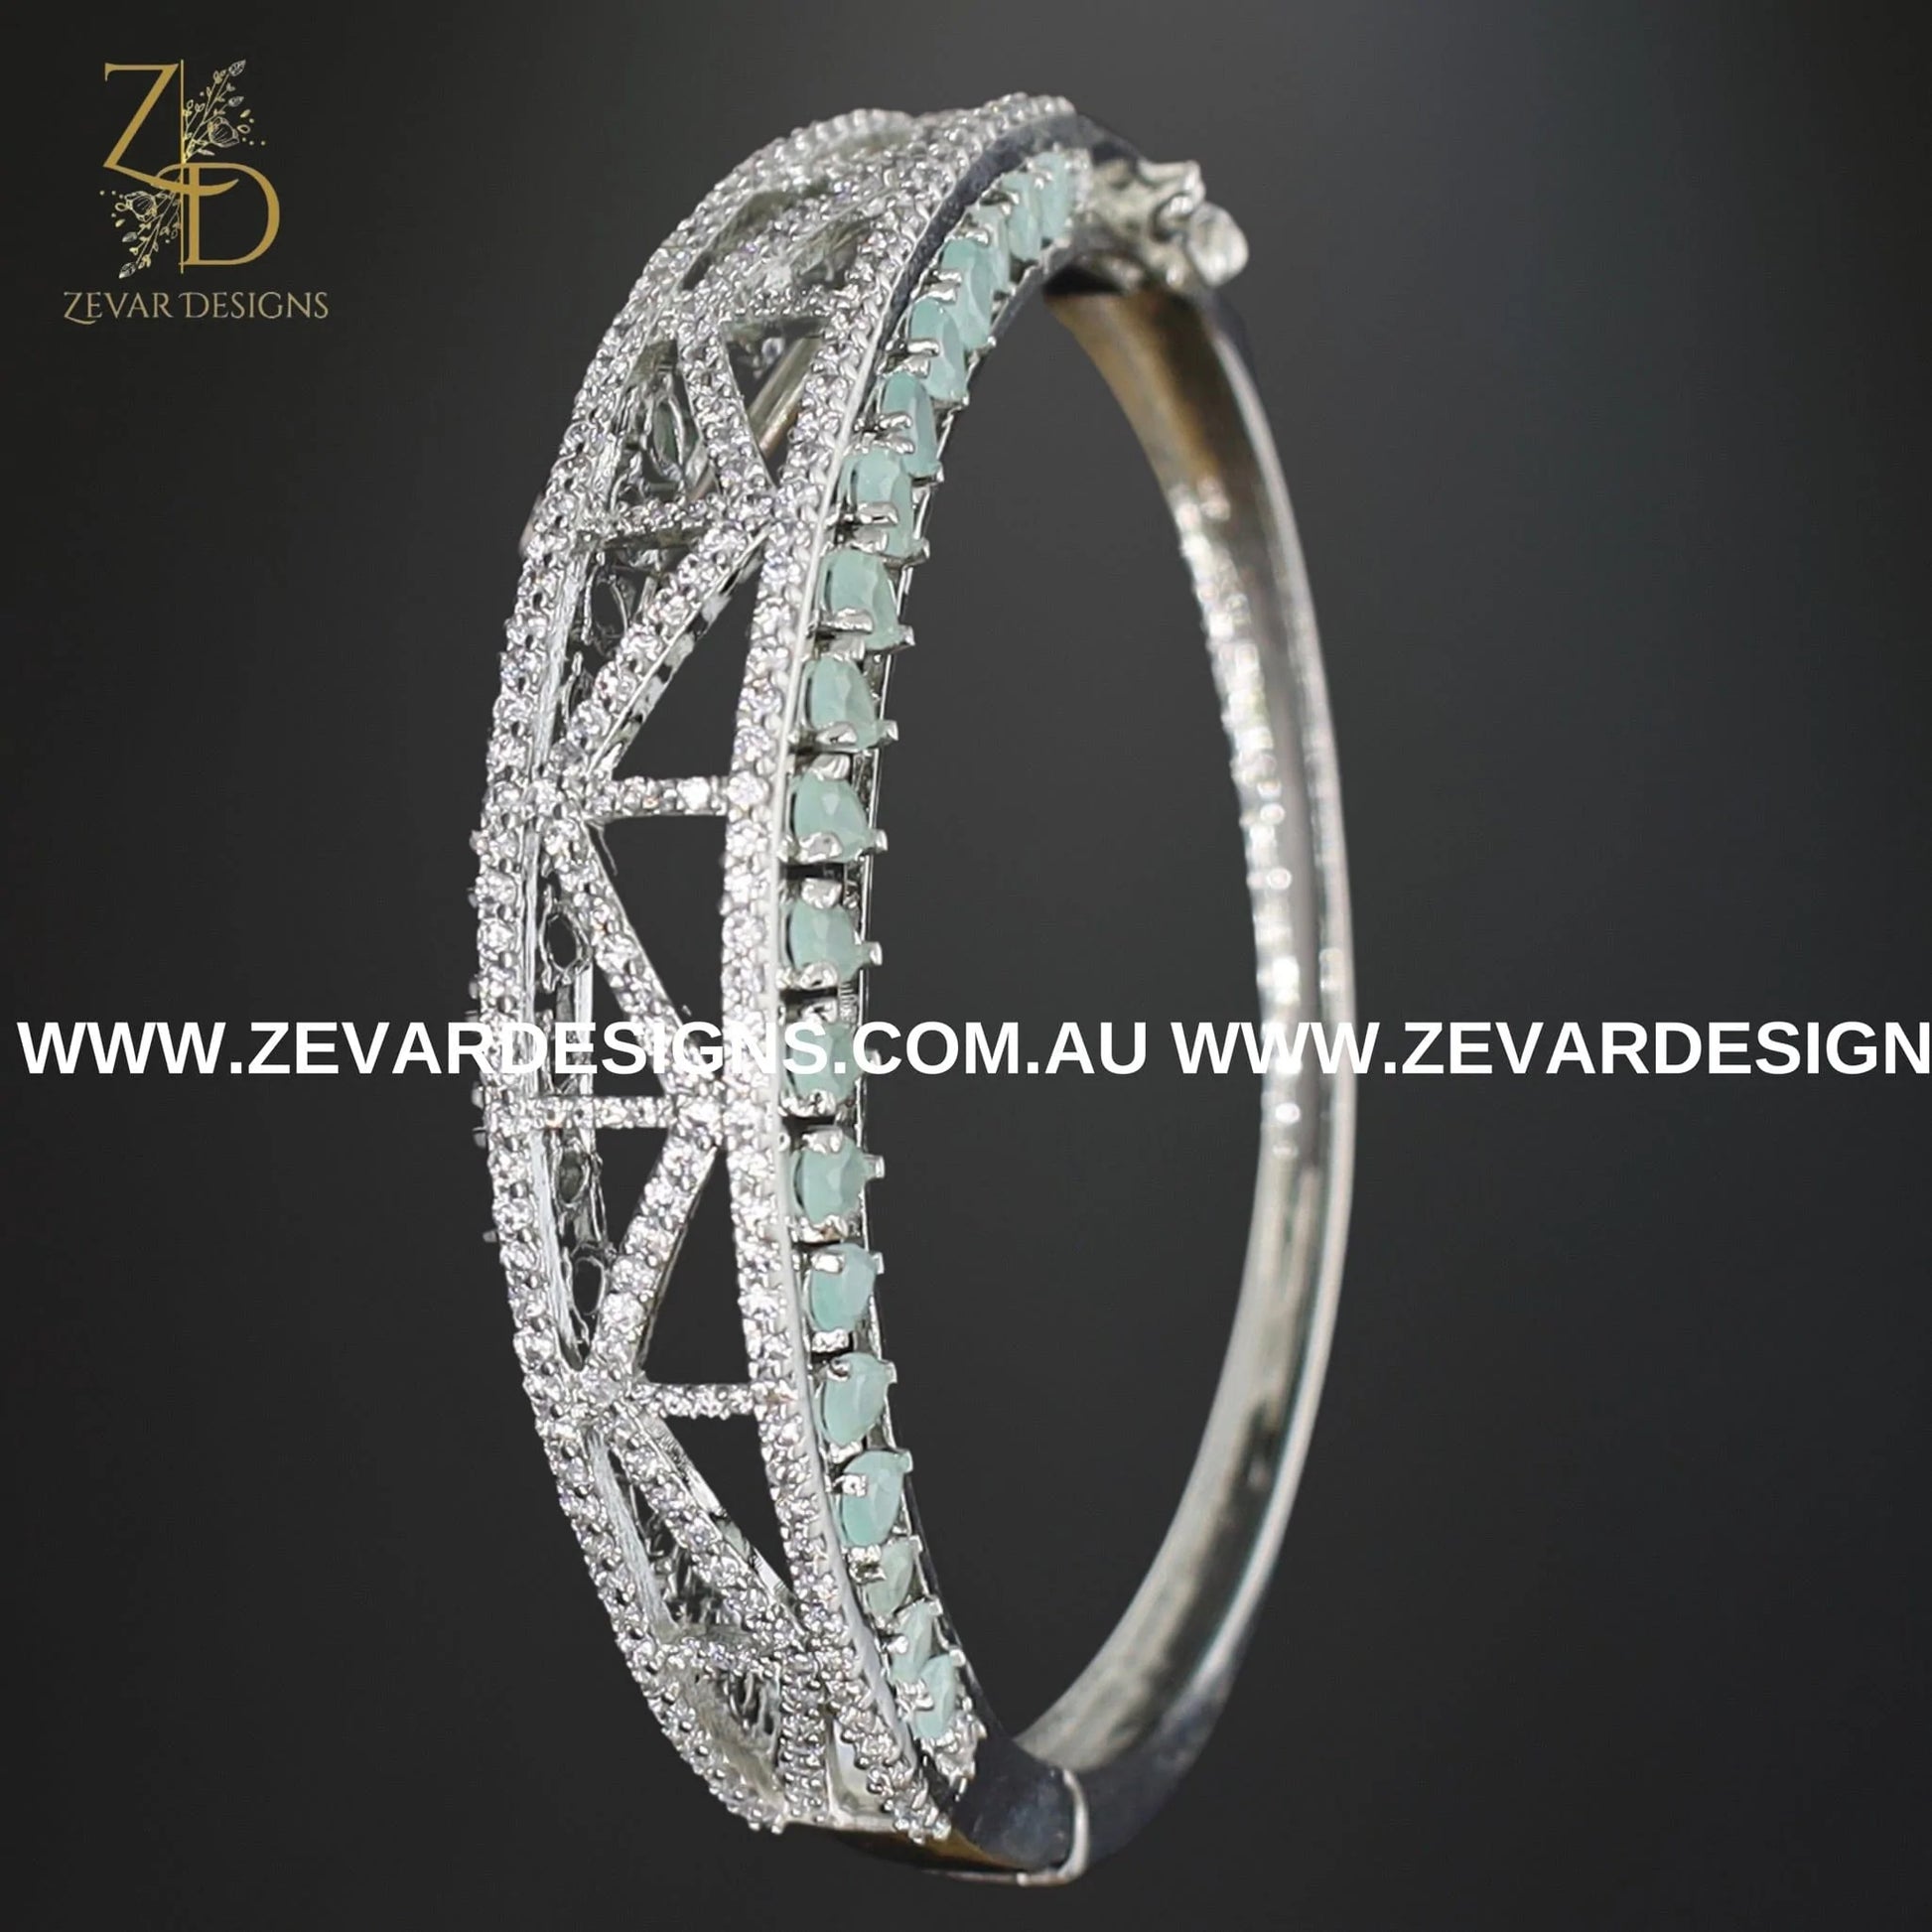 Zevar Designs Bangles & Bracelets - AD AD Bracelet in White Rhodium and Mint